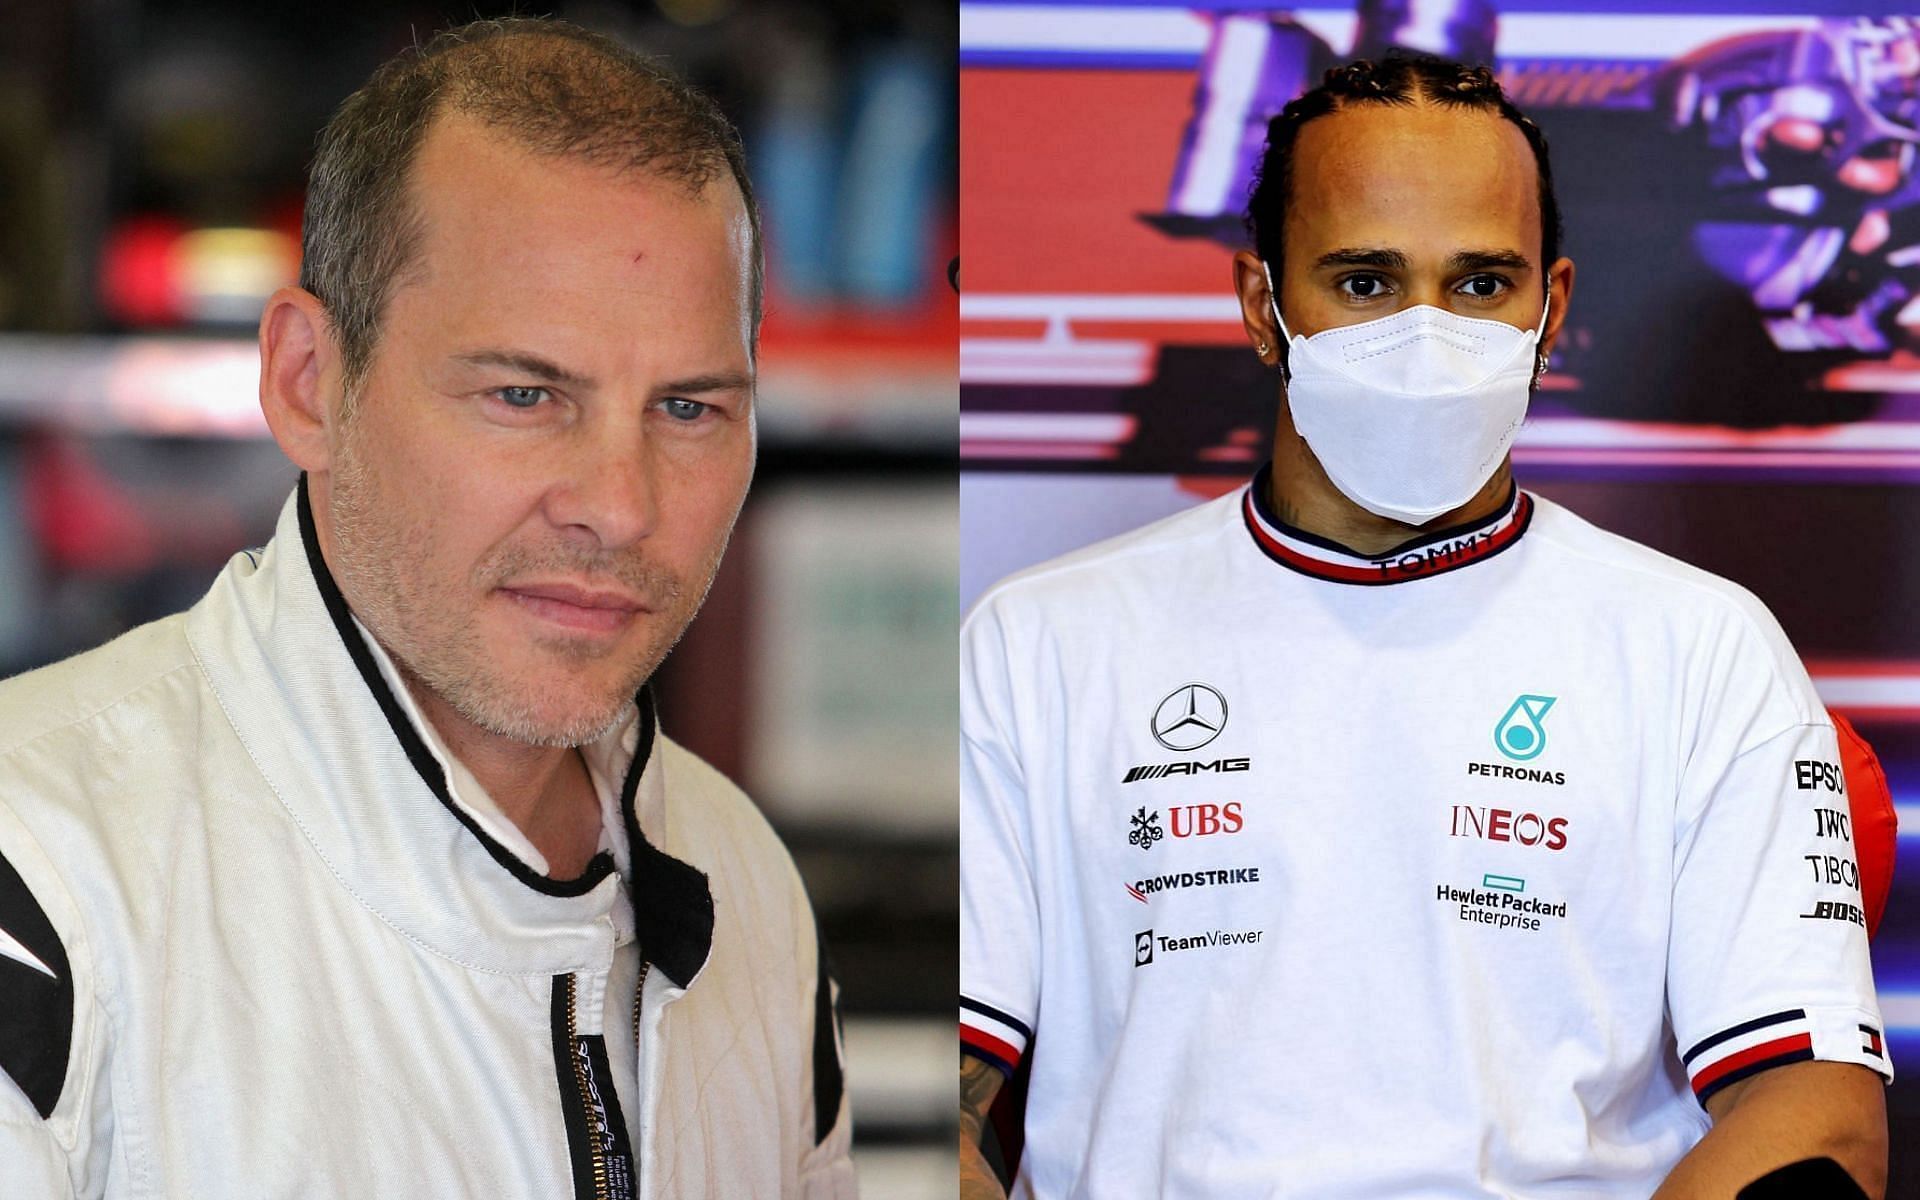 Jacques Villeneuve and Lewis Hamilton have a war of words ahead of the 2022 Australian GP